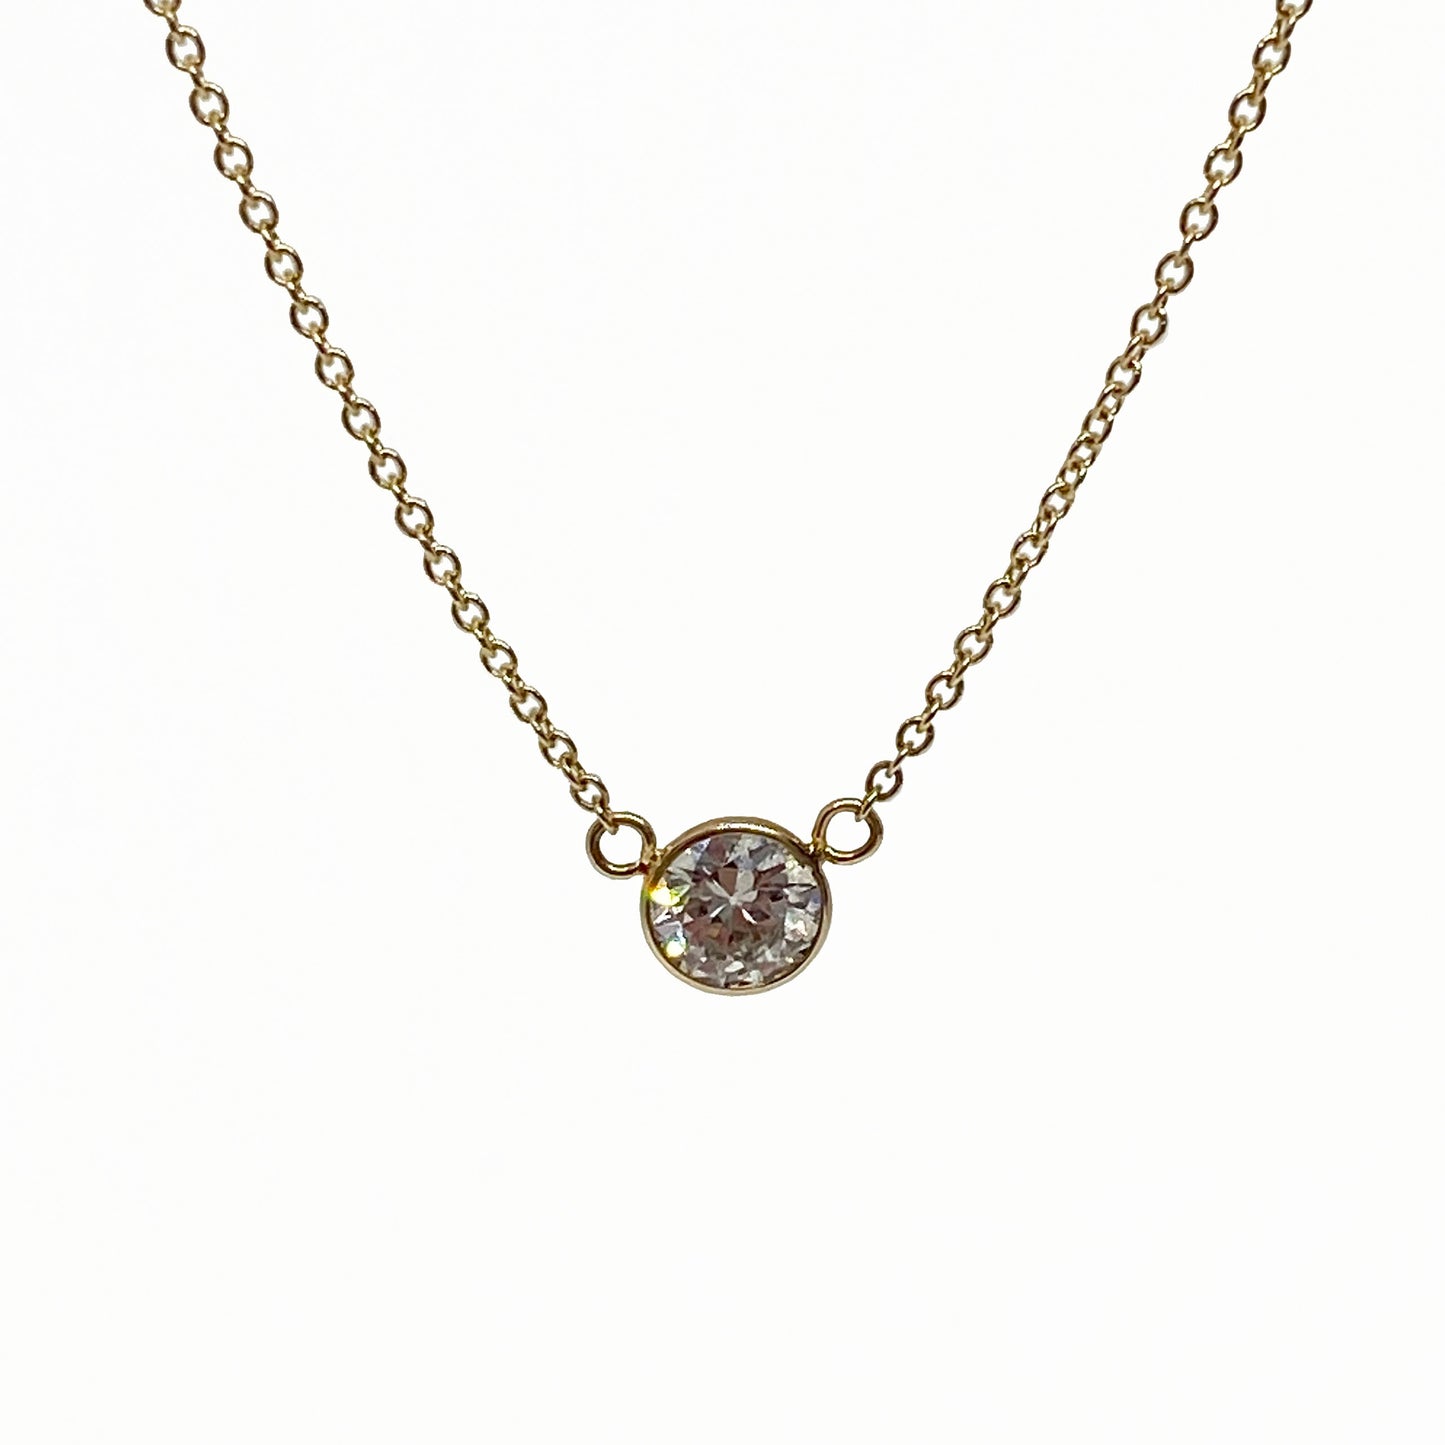 14ky Solitaire Diamond Necklace 0.43ct - eklektic jewelry studio